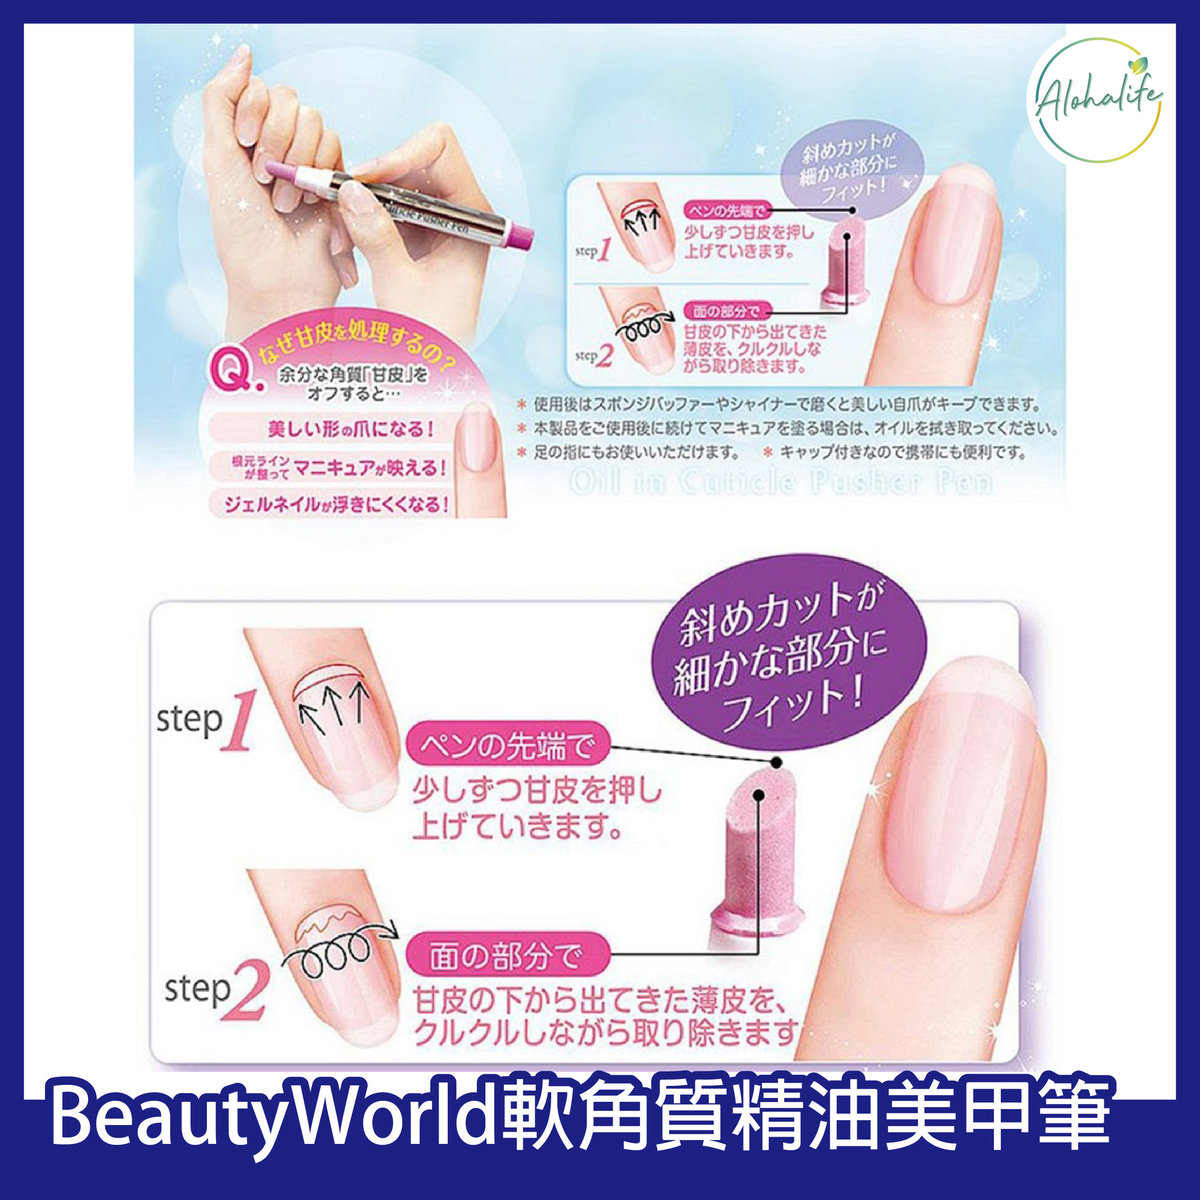 Beauty World 去死皮滋潤推棒筆 美甲 去甘皮去死皮 滋潤護理 Hktvmall 香港最大網購平台